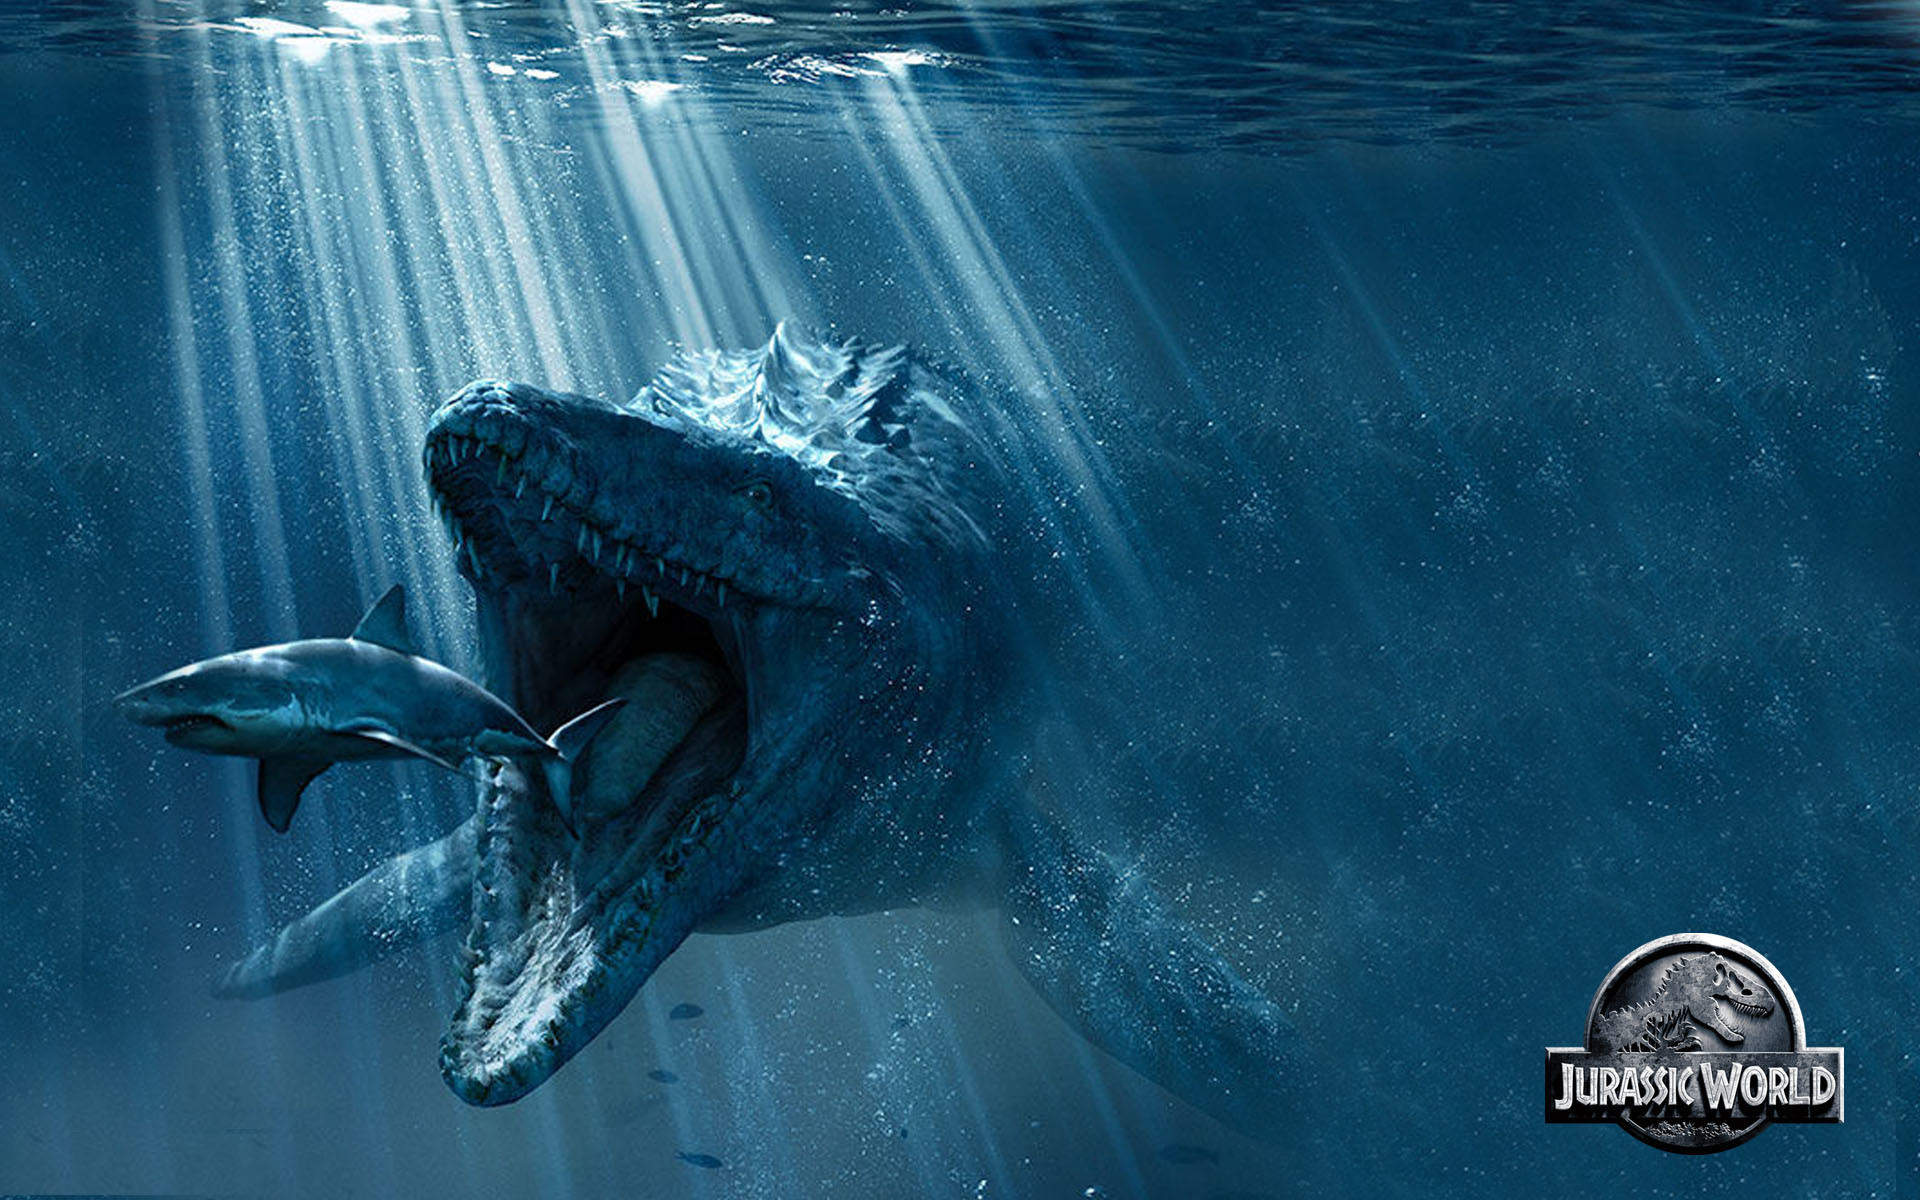 Jurassic World Wallpaper Image